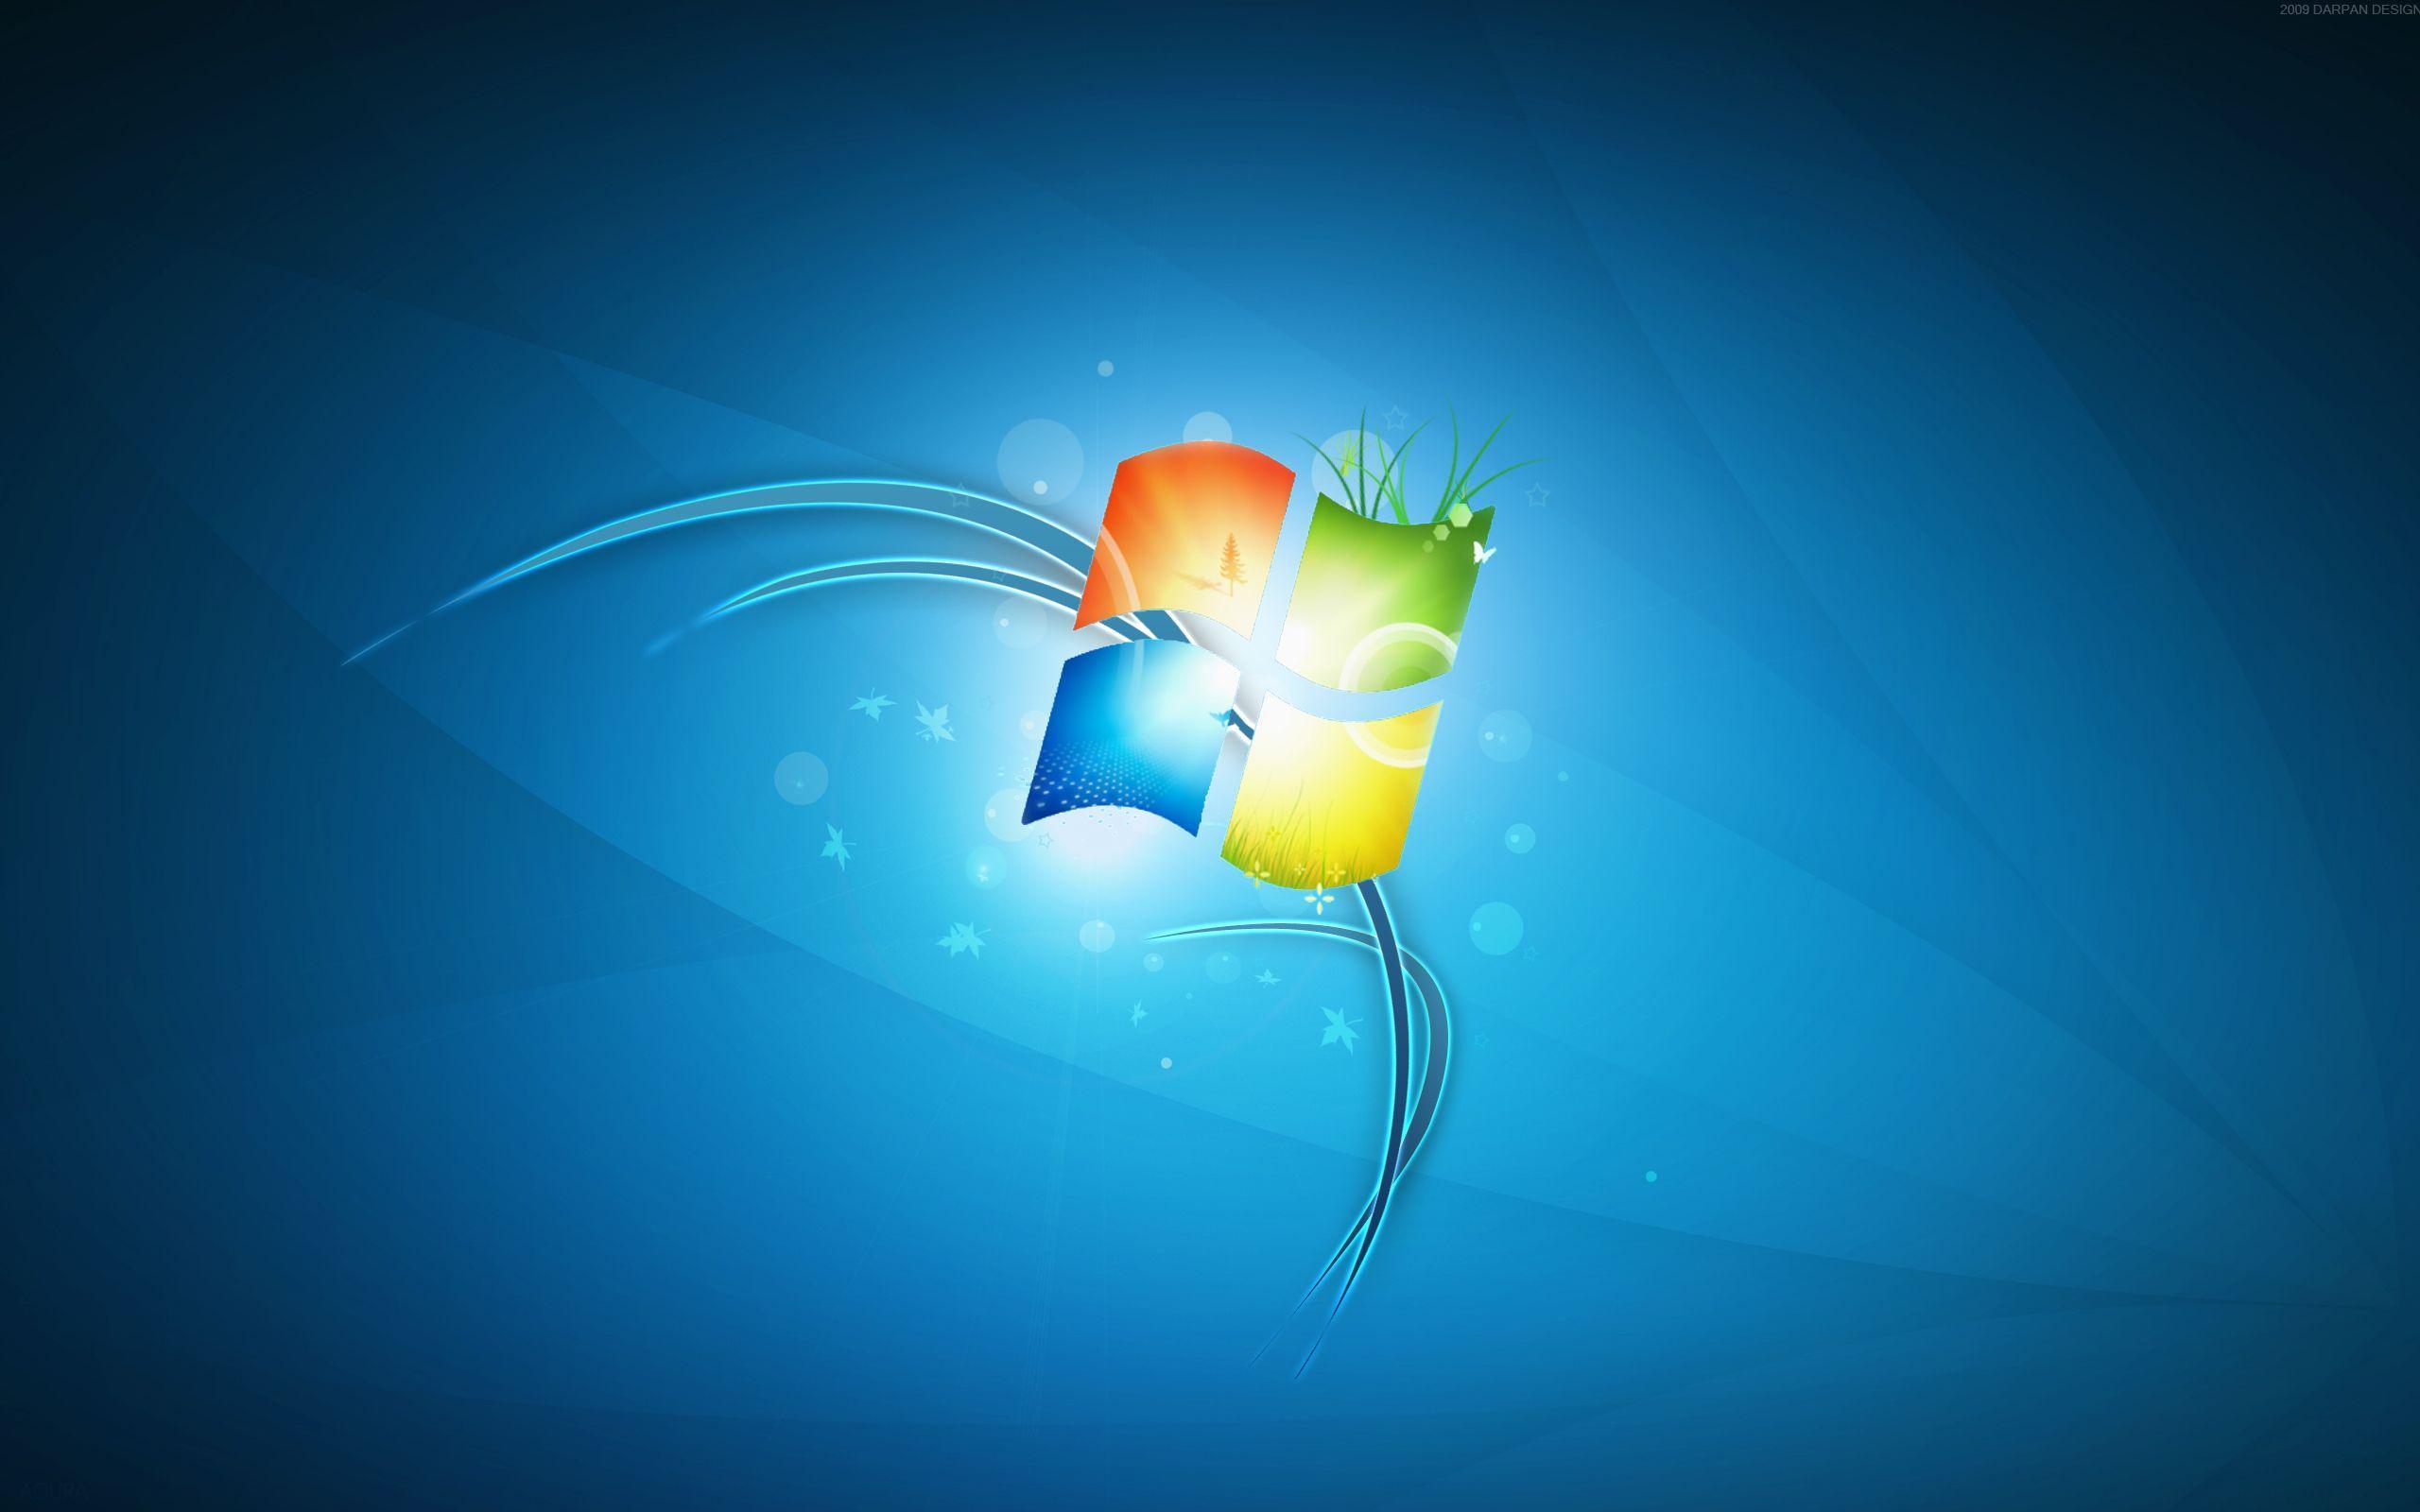 Windows 7 HD Wallpaper. fbpapa